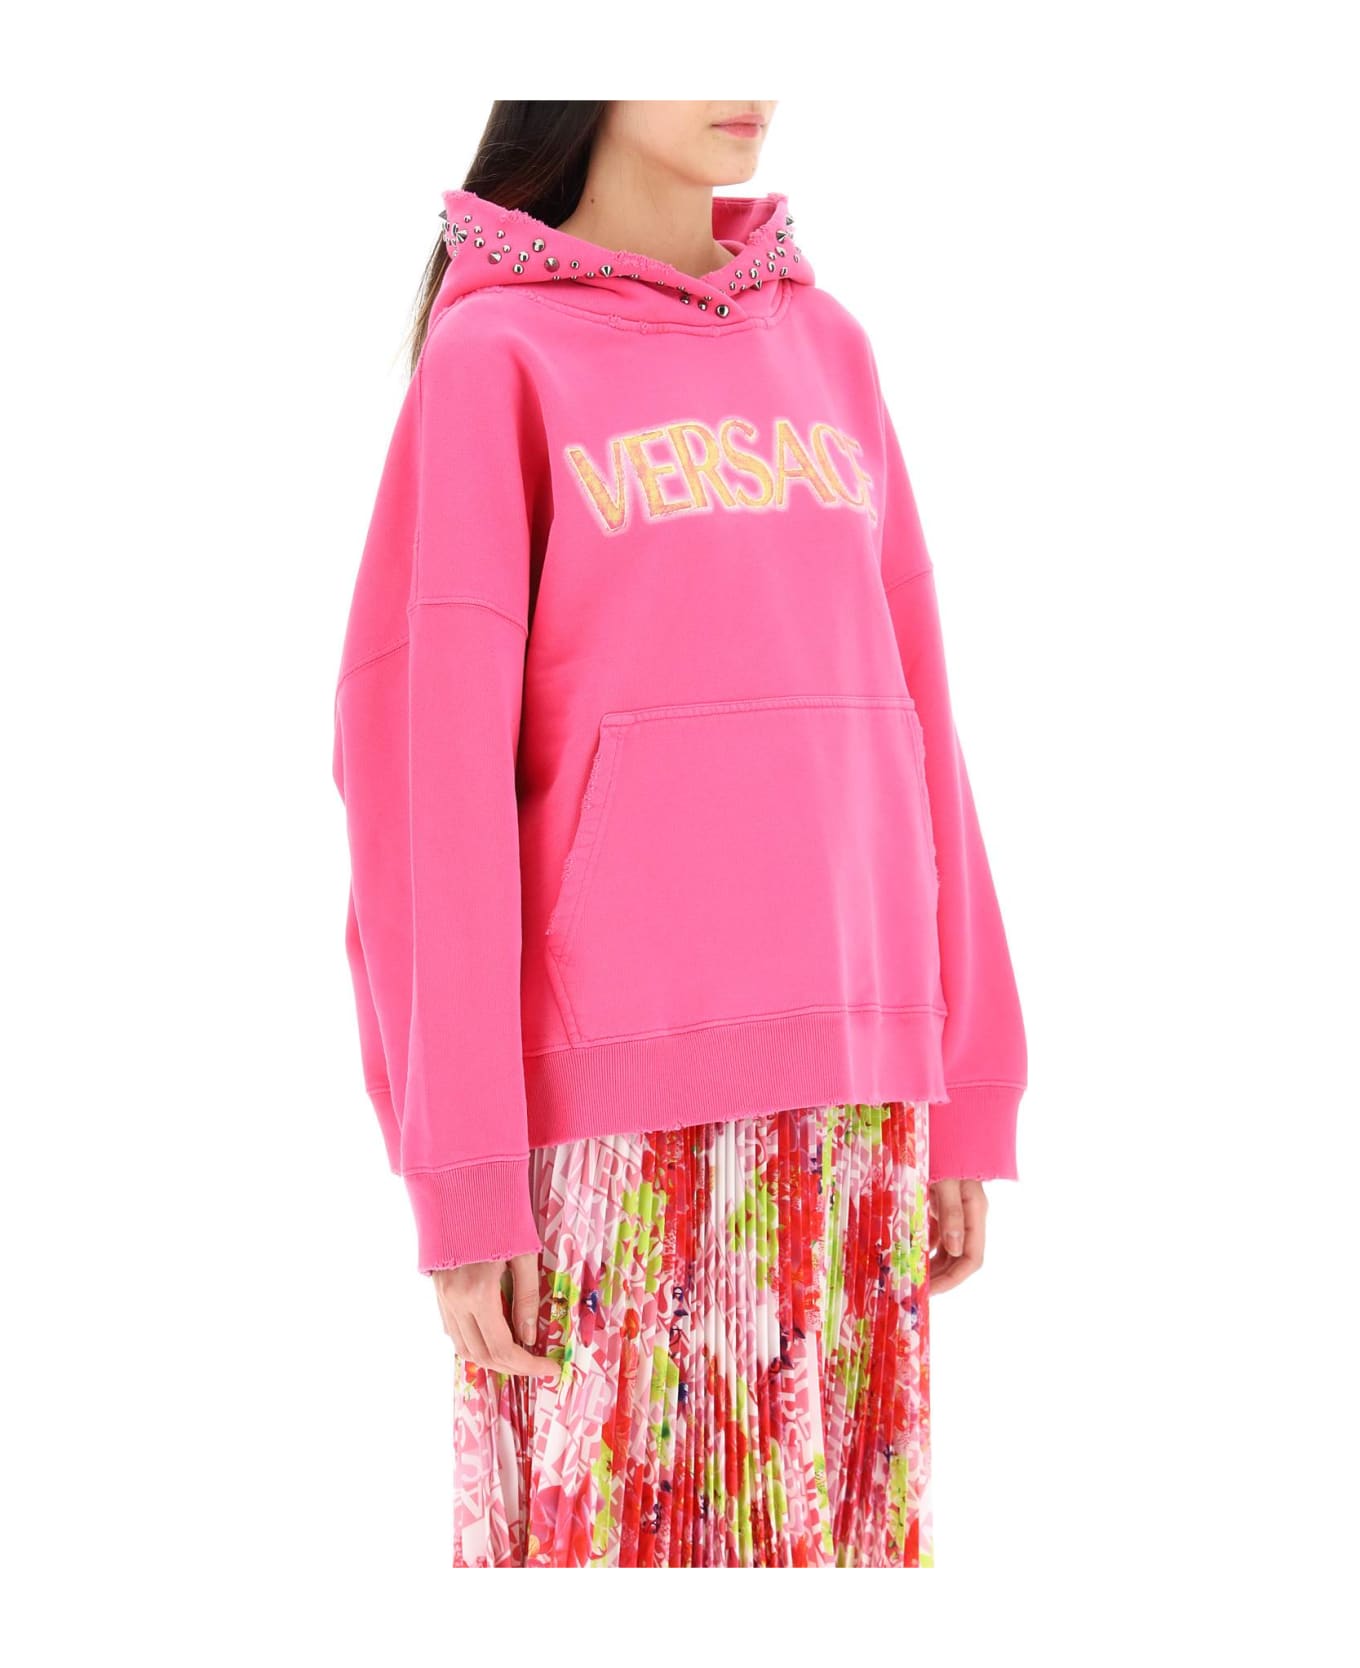 Versace Hoodie With Studs - Pink